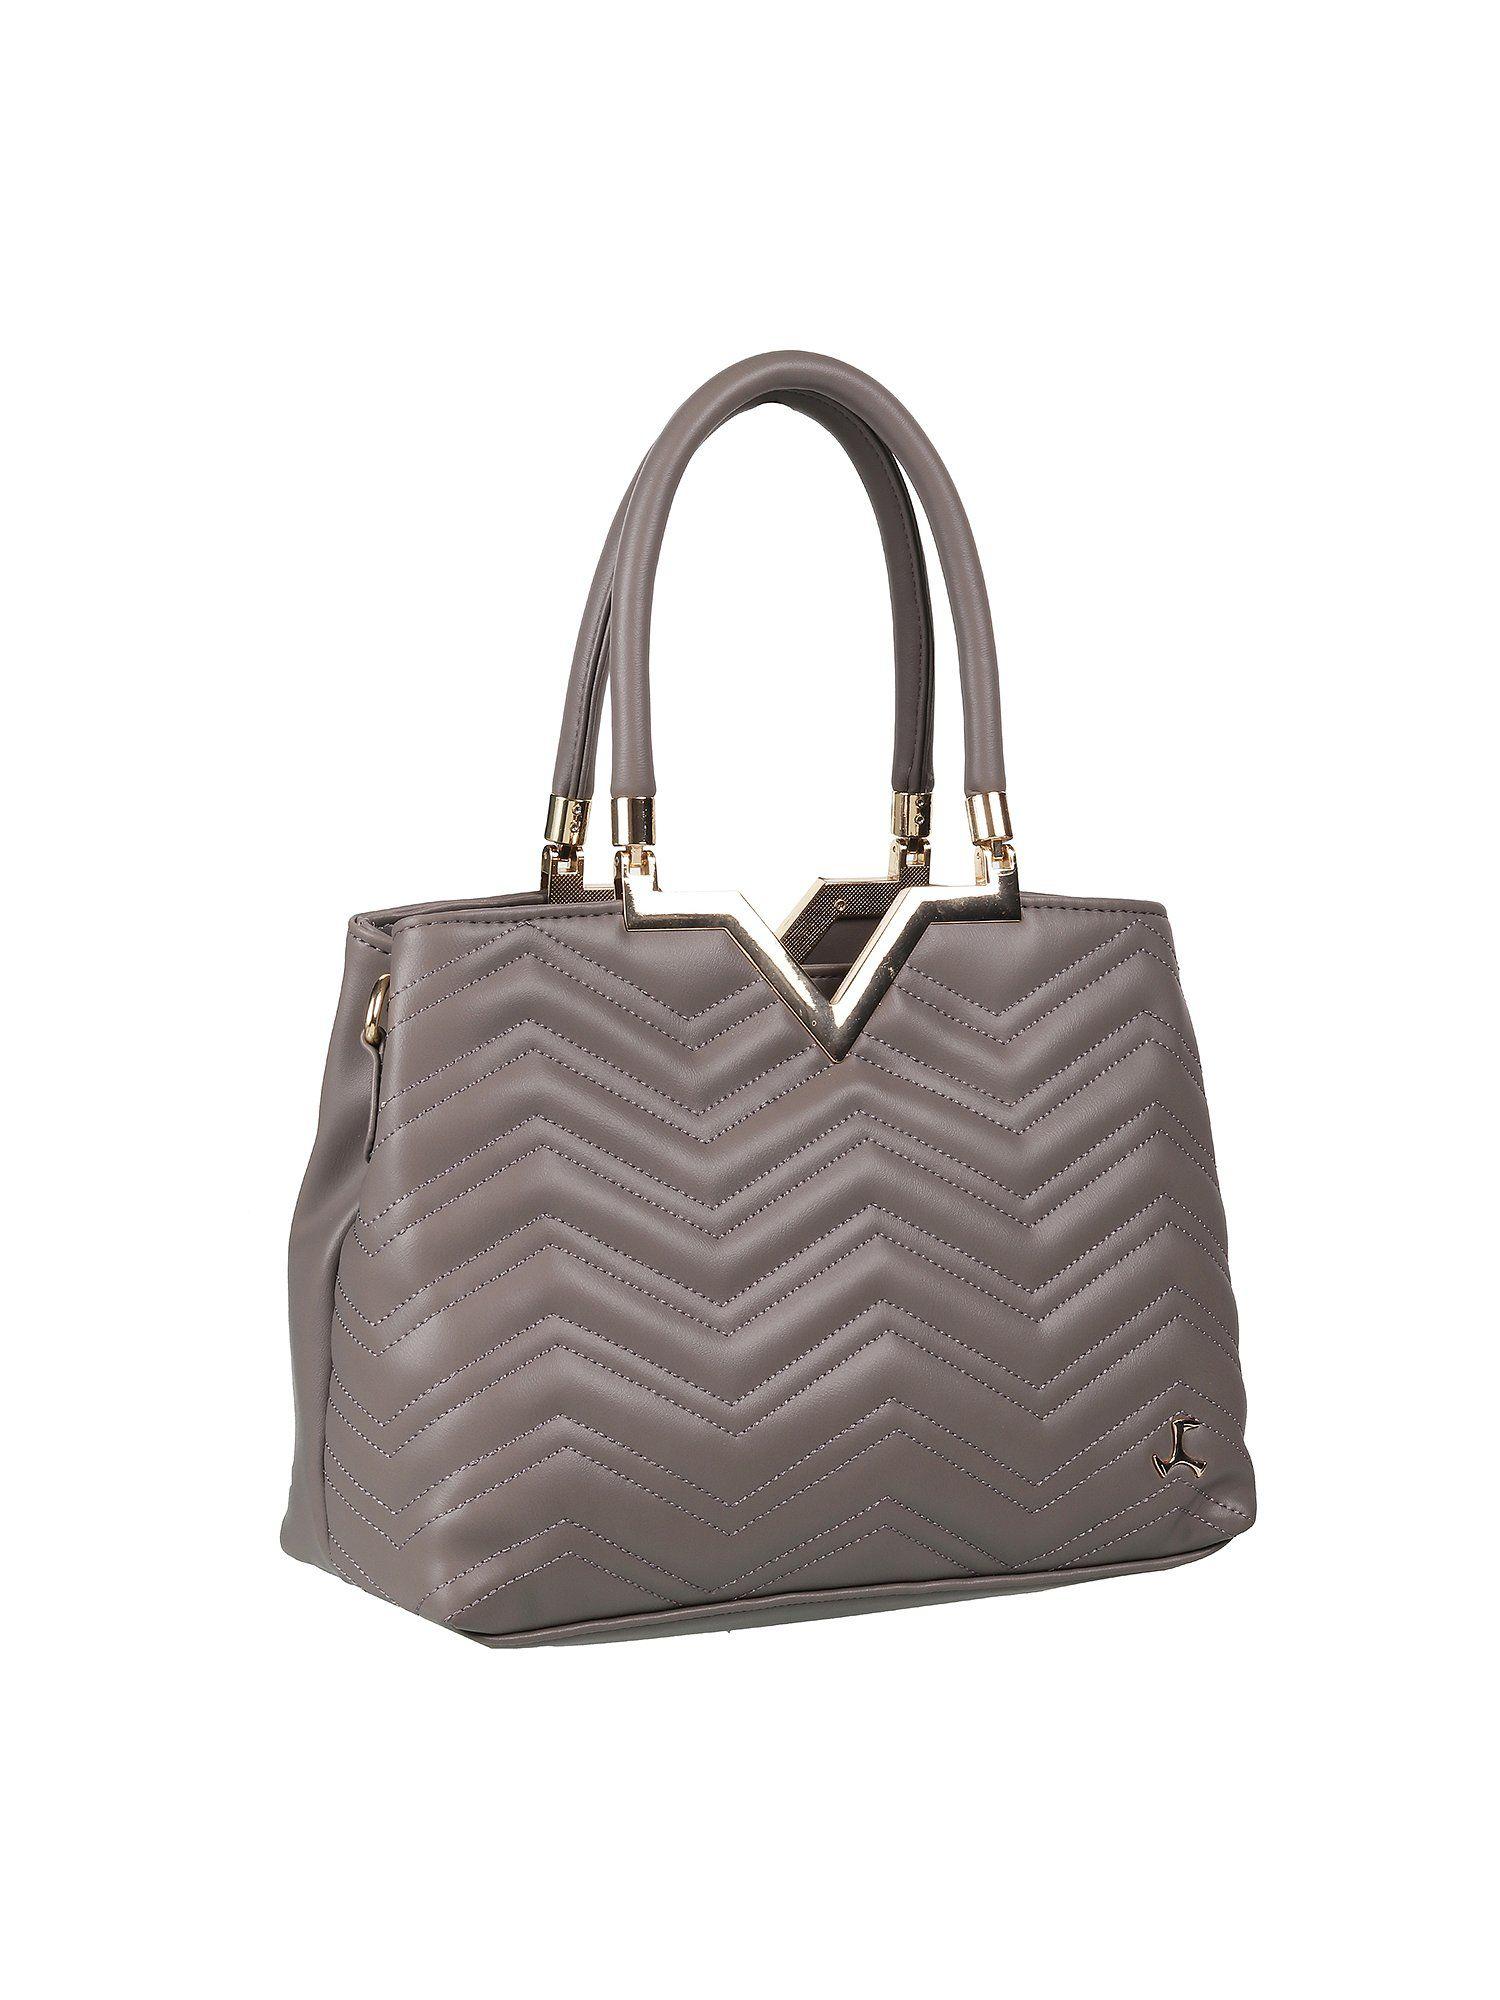 patterned grey satchel